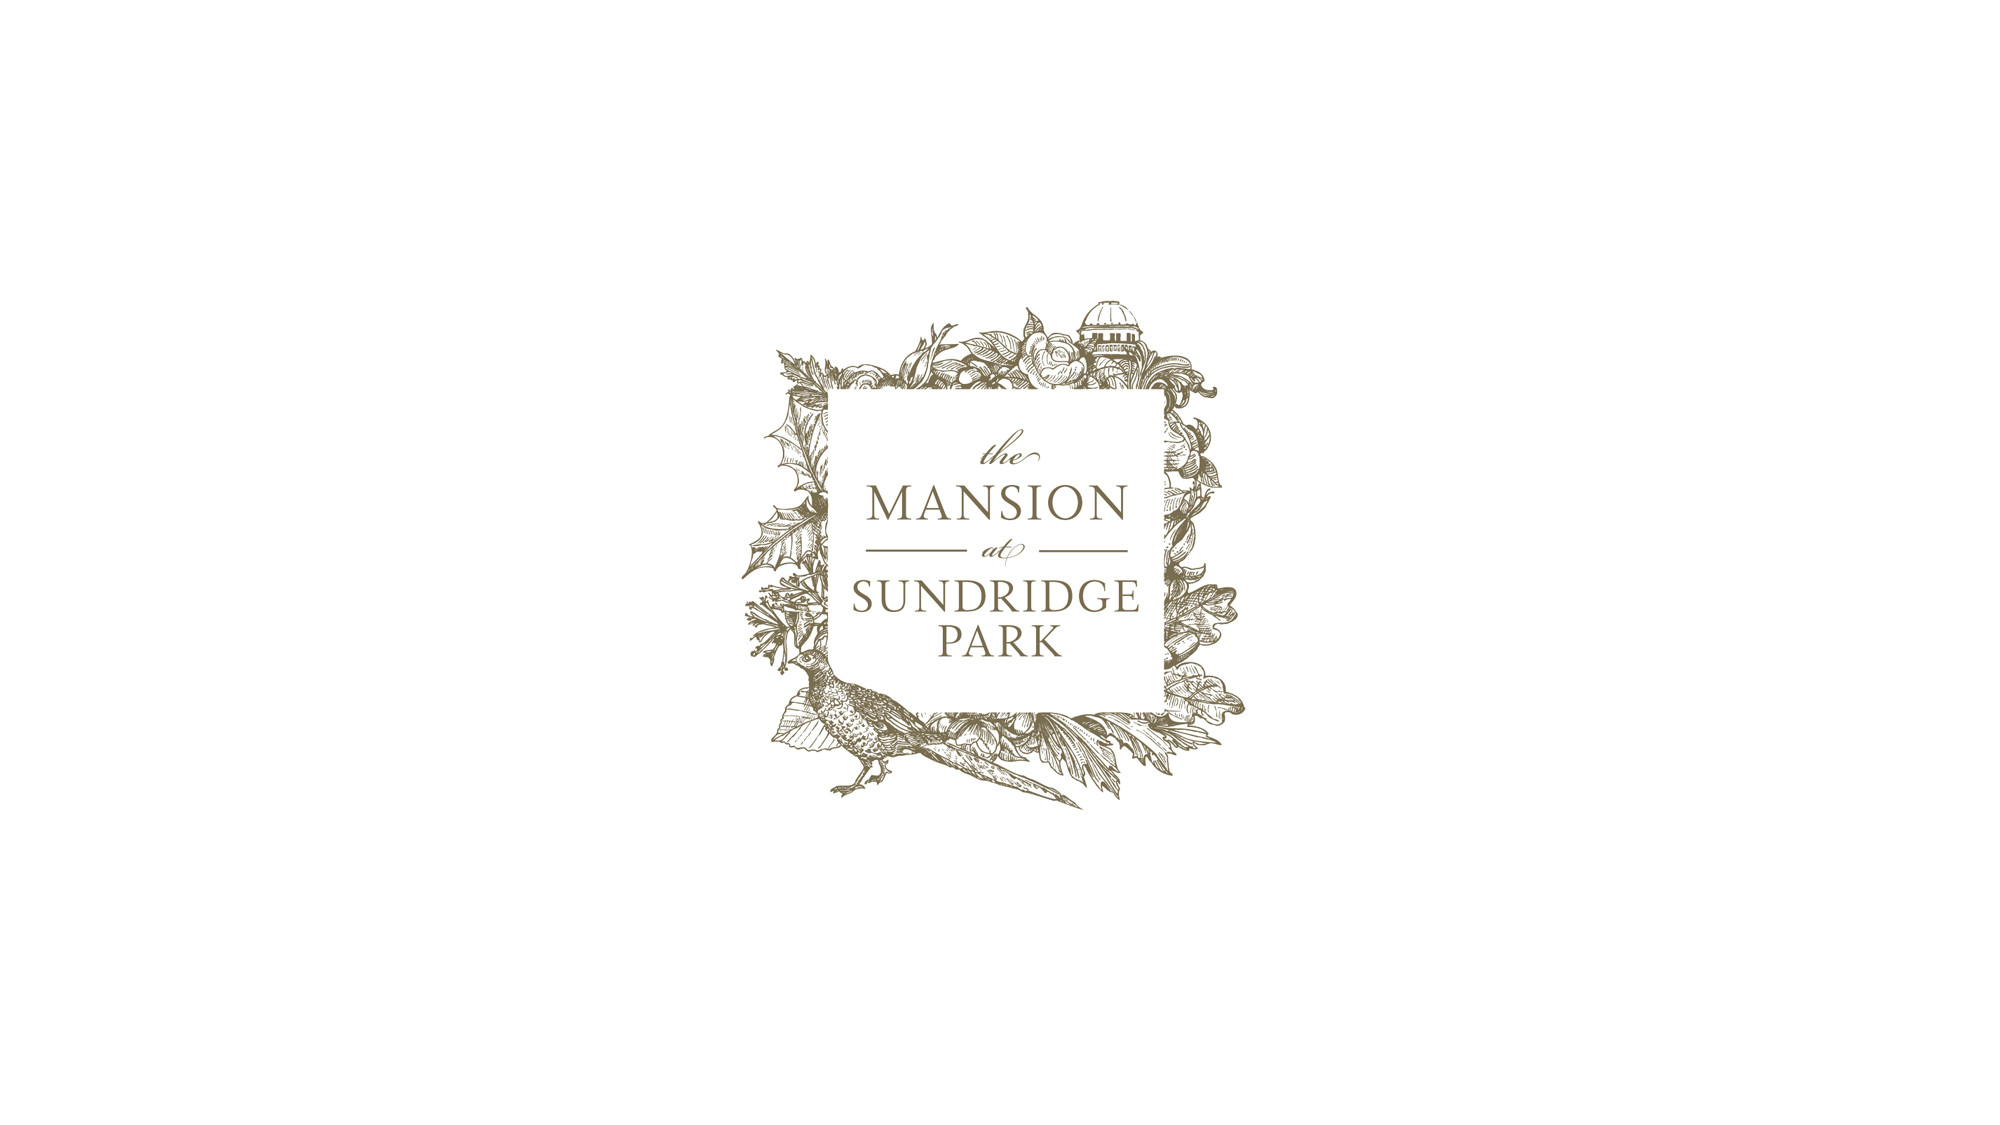 The Mansion at Sundridge Park development logo